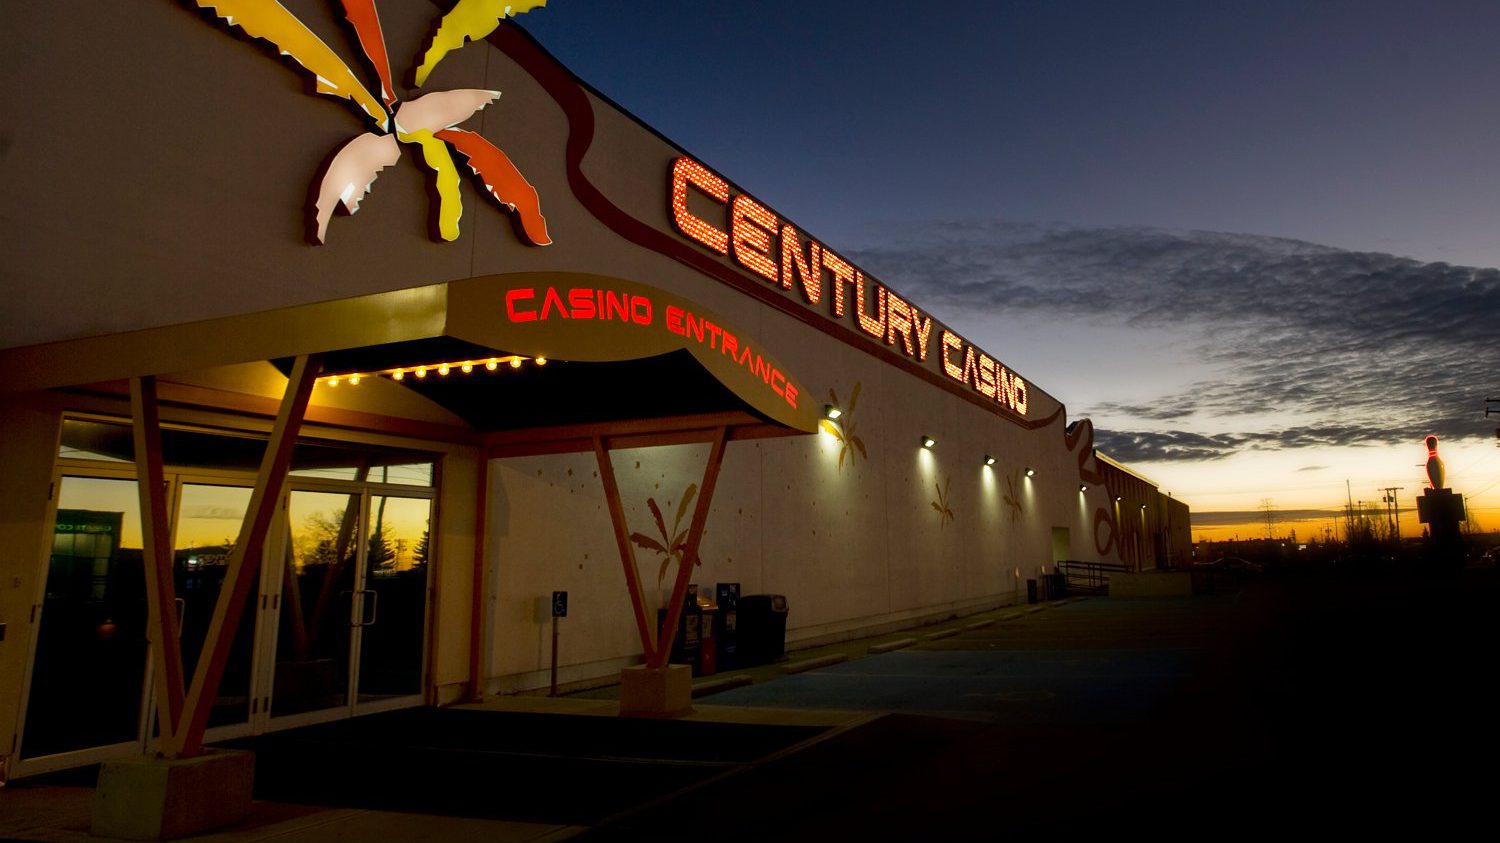 Memphis Casinos